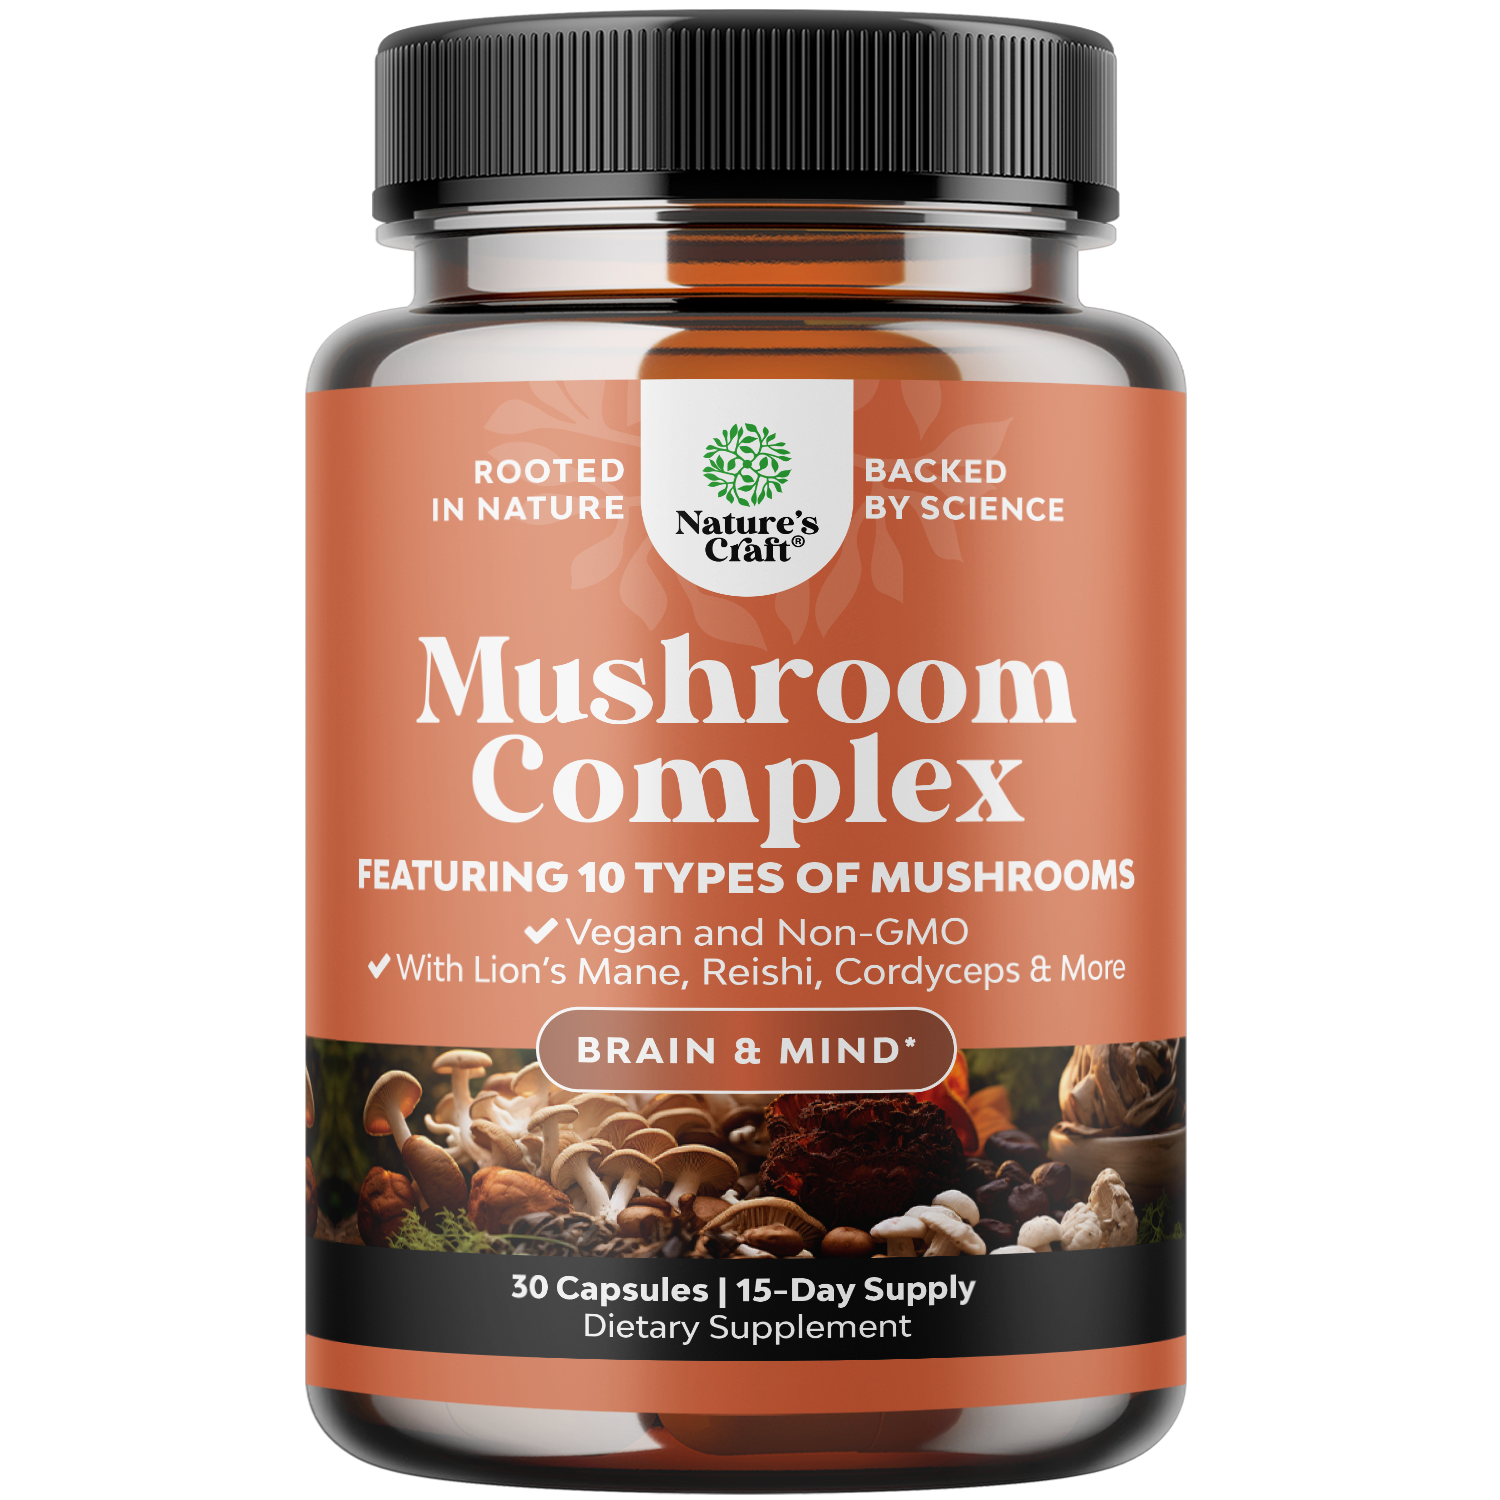 Mushroom Complex